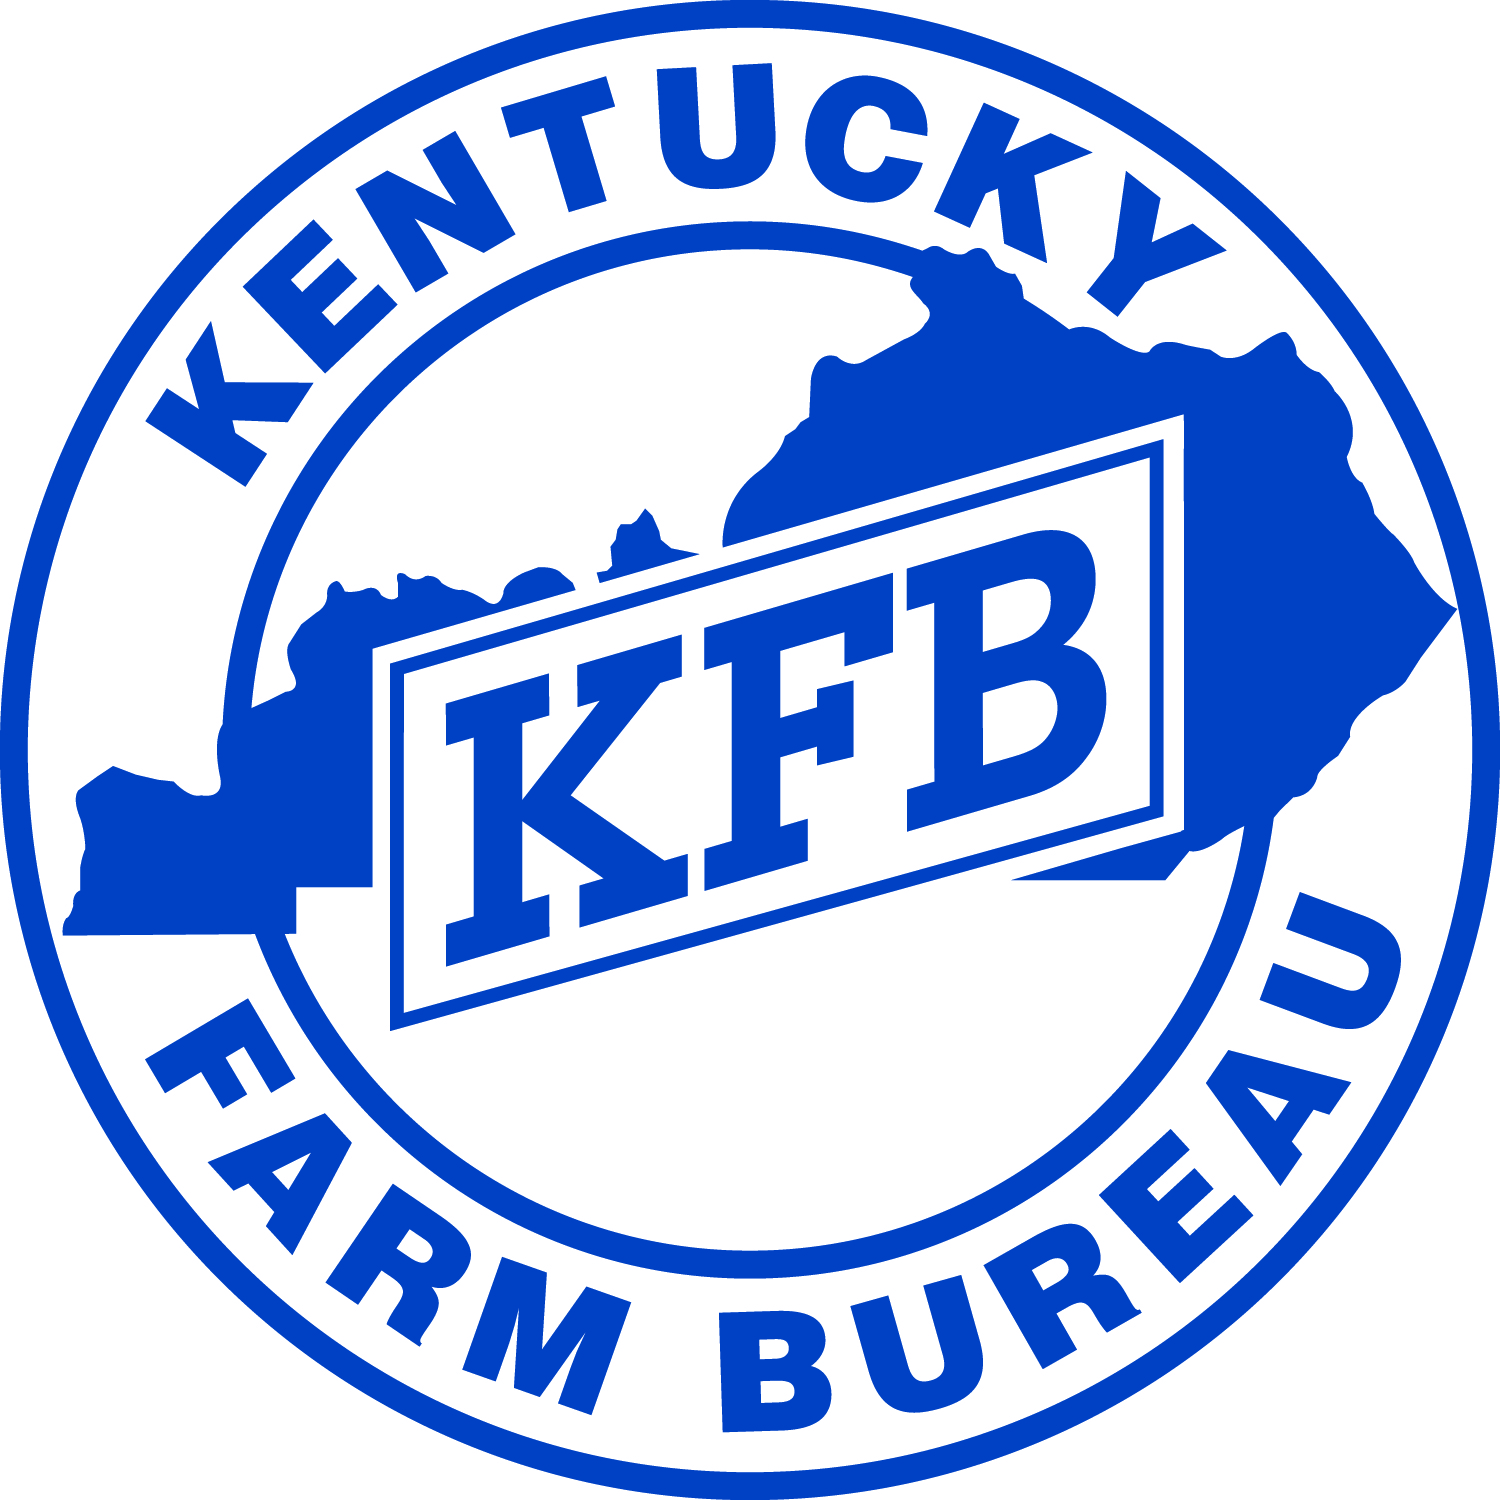 Kentucky Farm Bureau, the Voice of Kentucky Agriculture Kentucky Farm